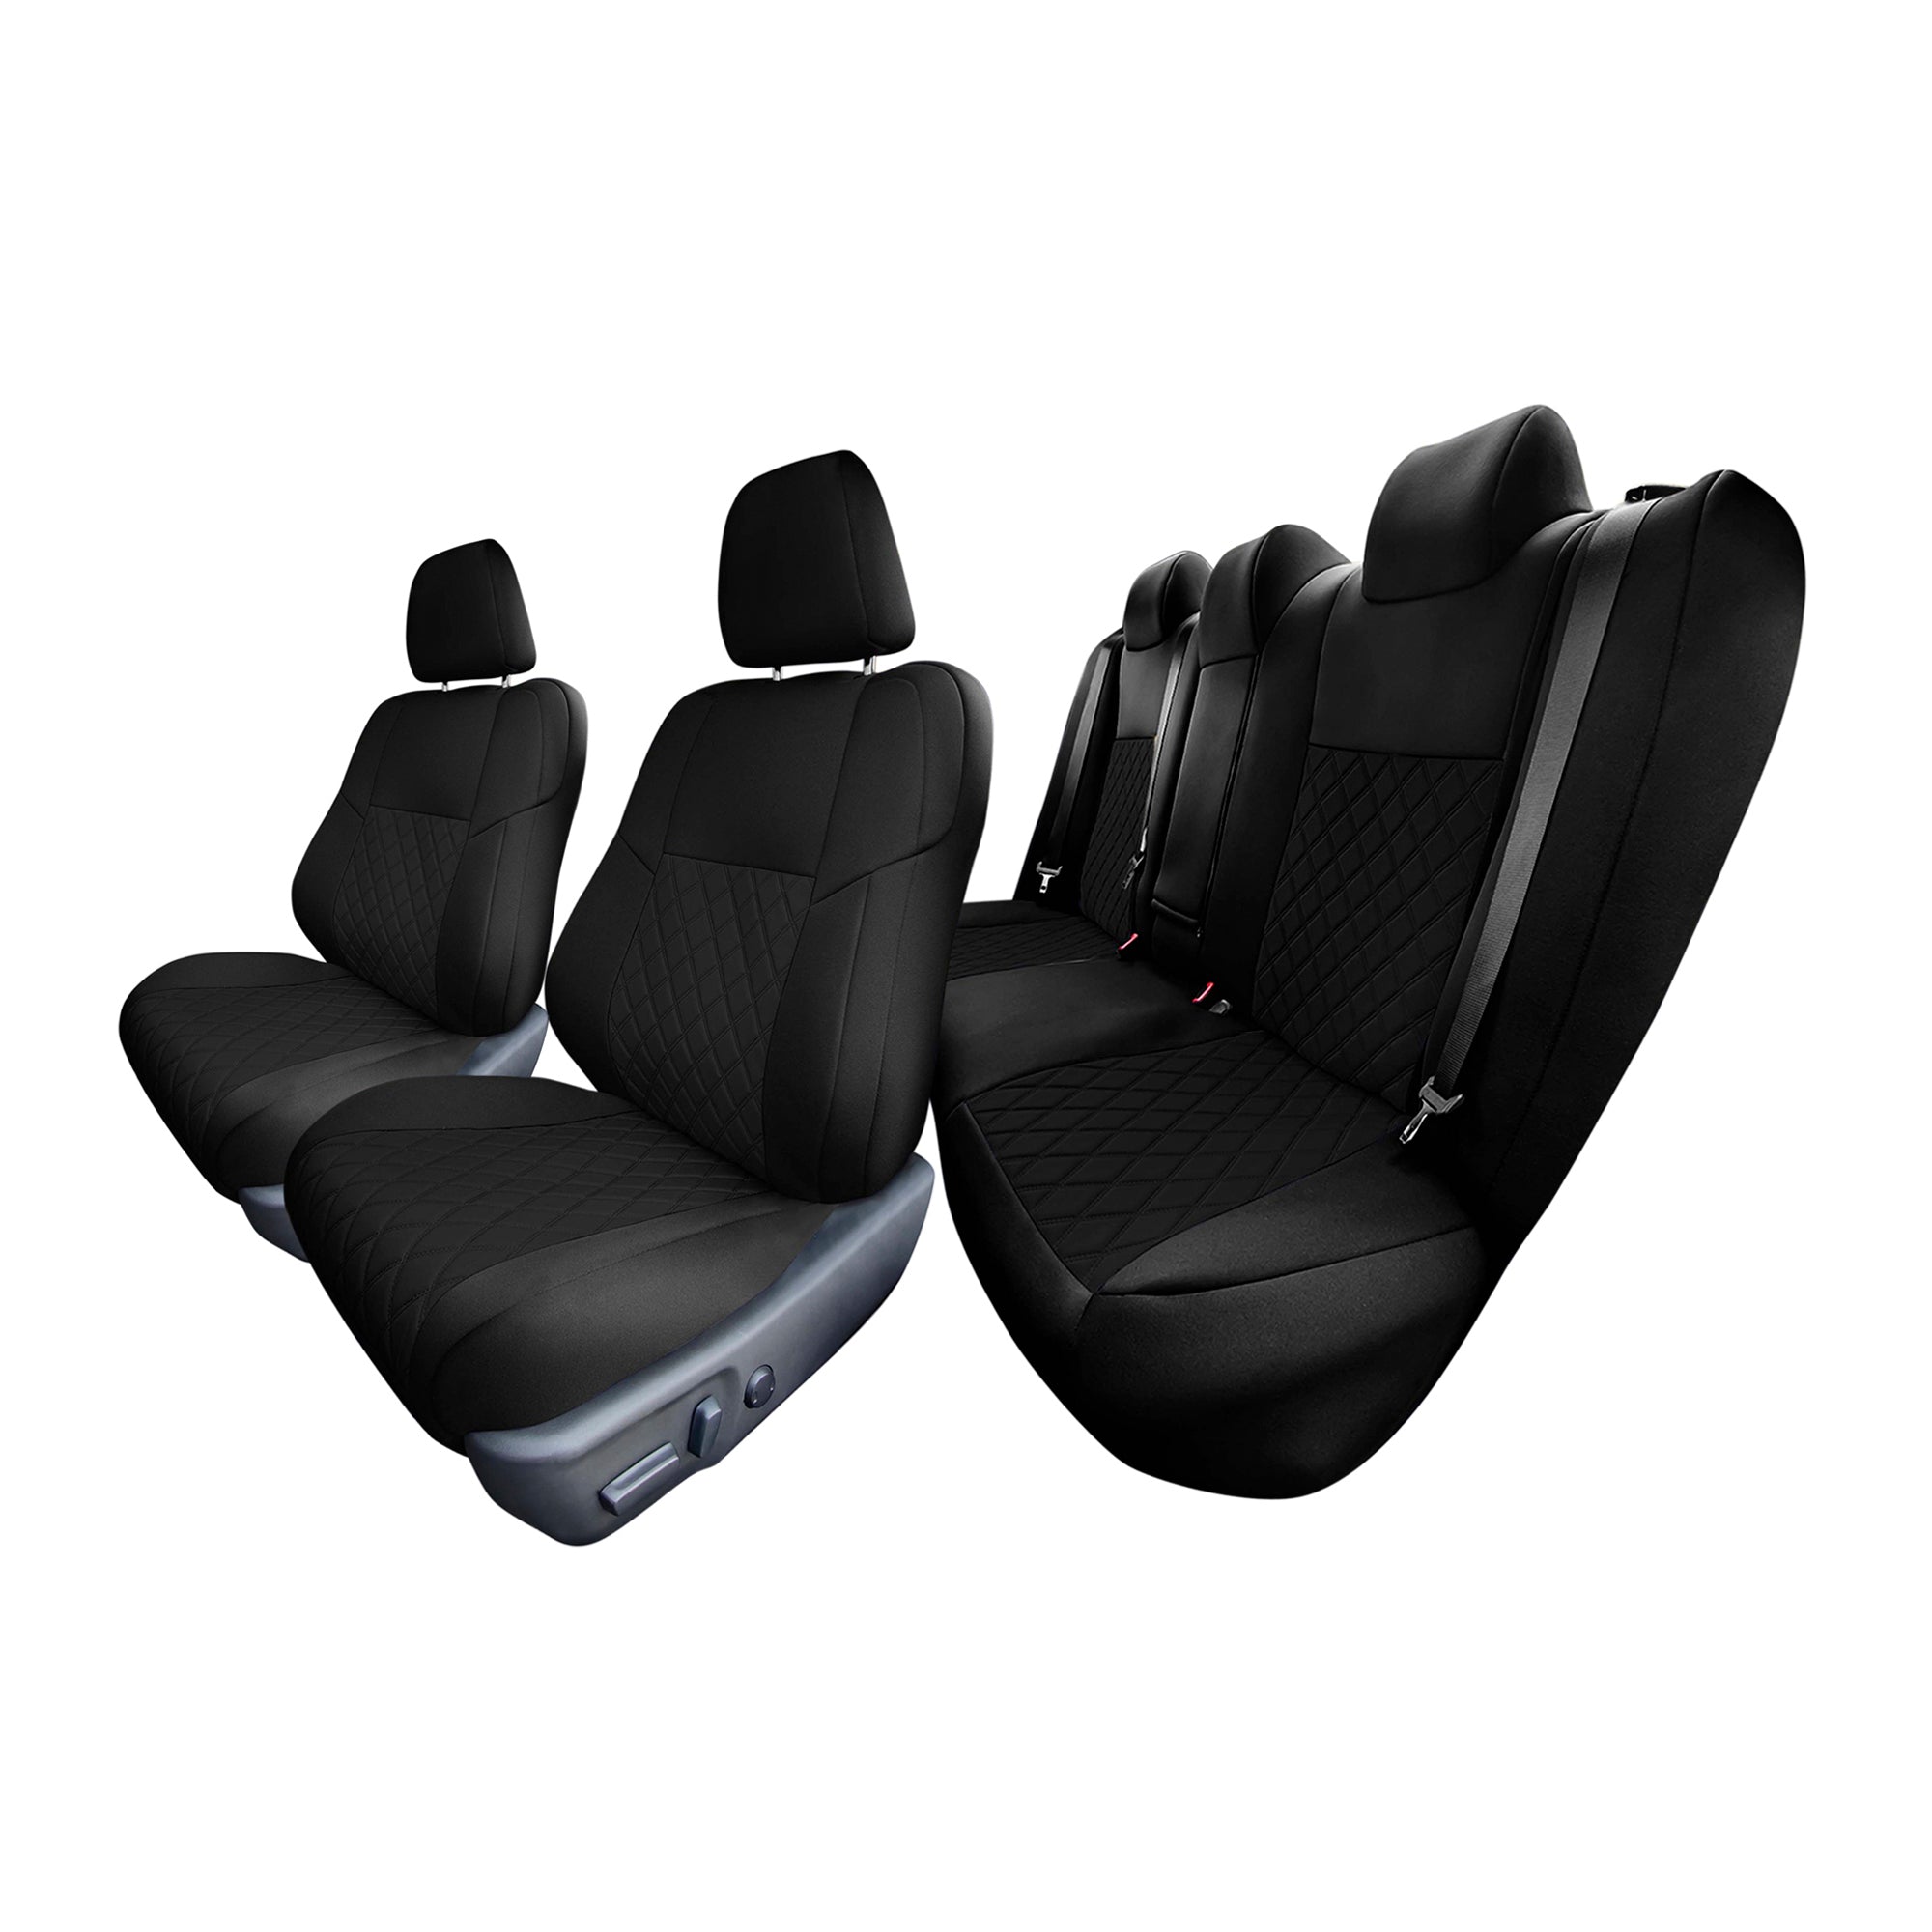 Toyota Camry LE | SE | XSE | XLE  2012-2017 - Full Set Seat Covers - Black Ultraflex Neoprene